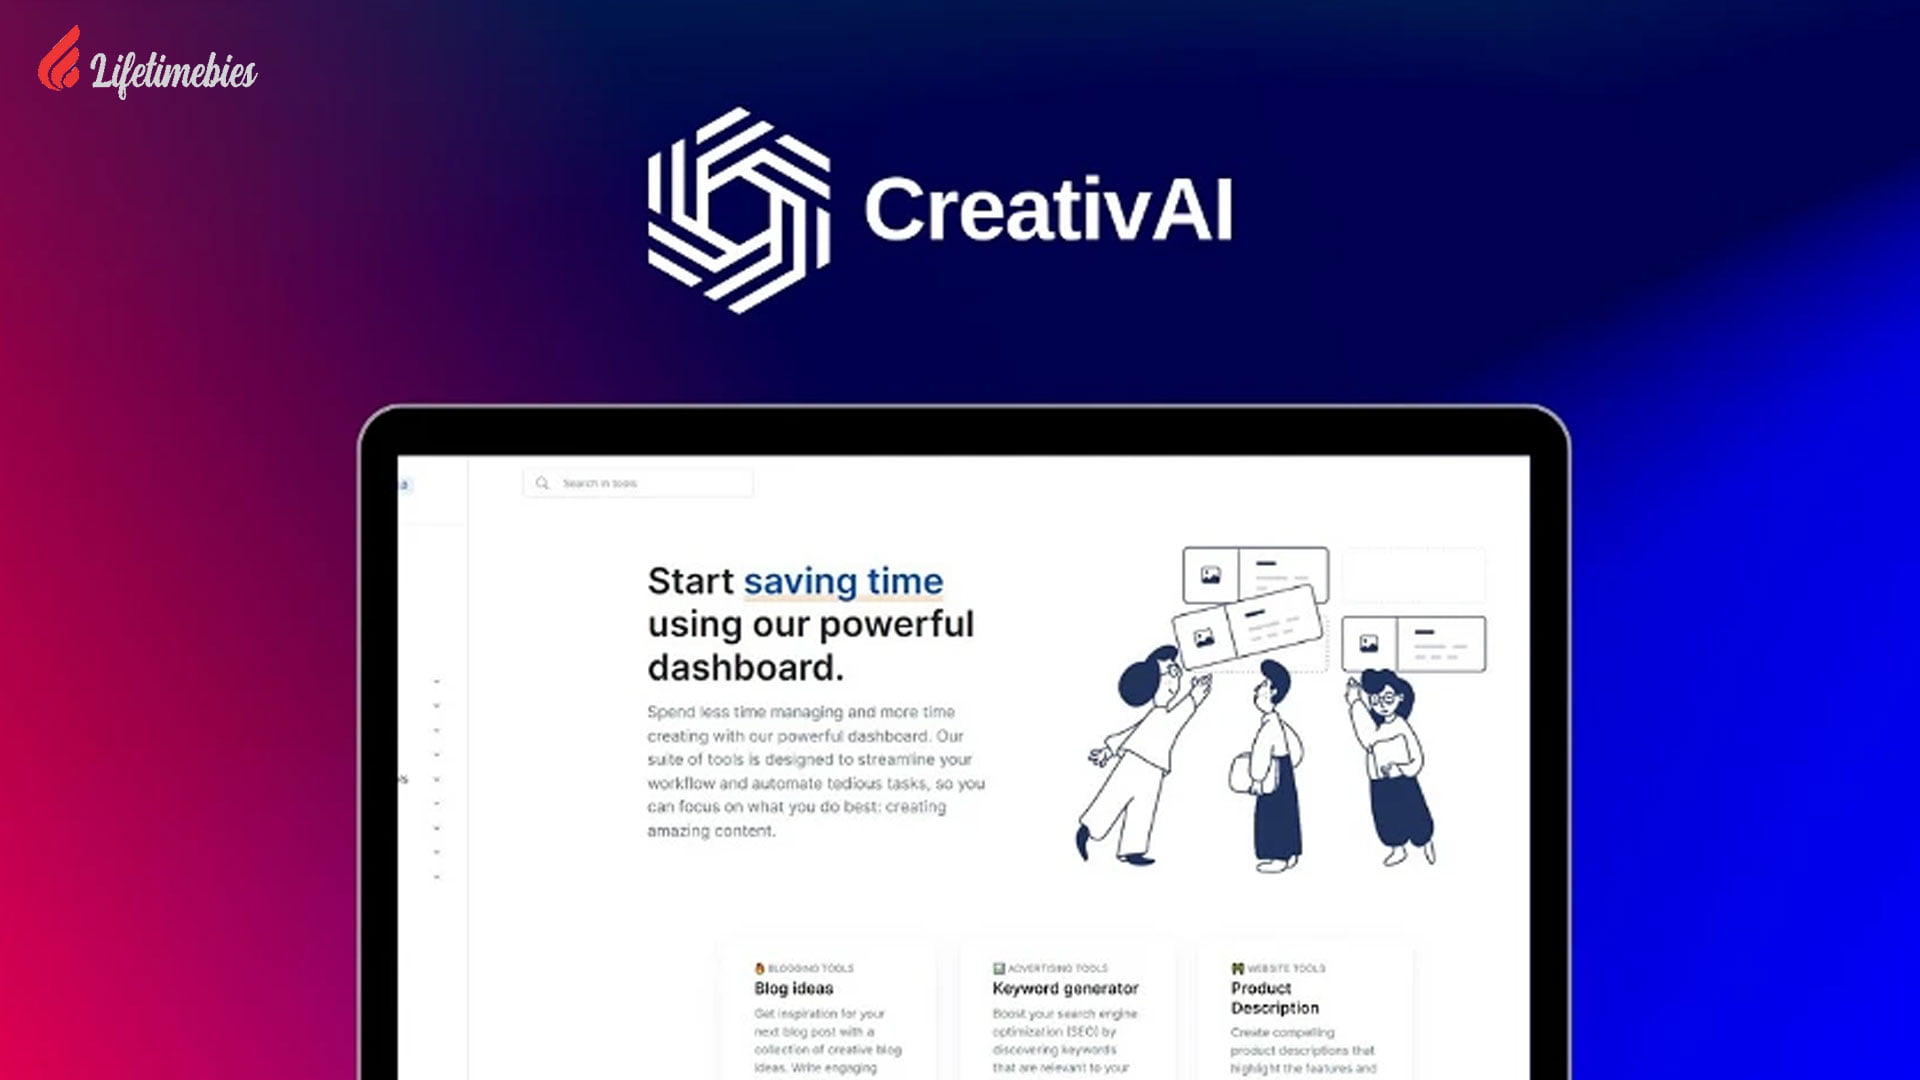 CreativAI-Lifetime-Deals